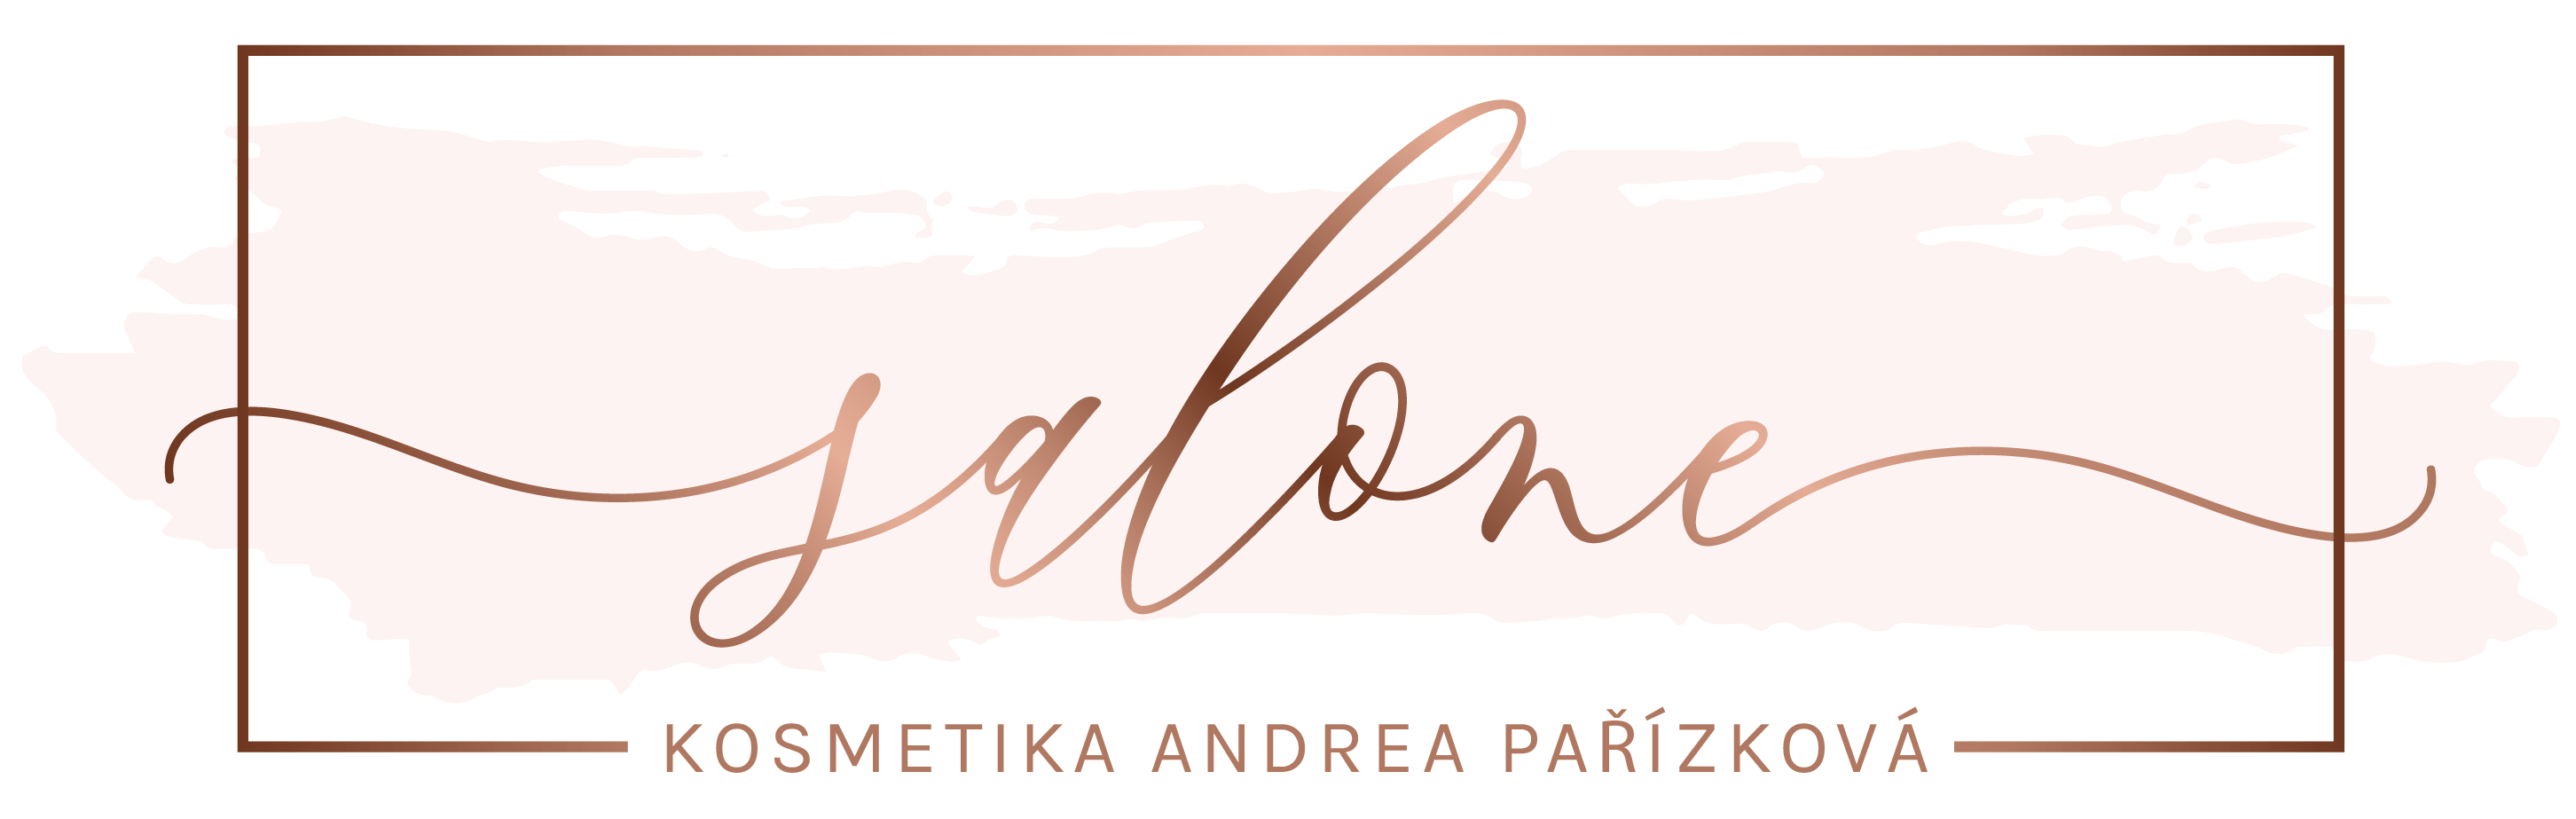 Salone - kosmetika Andrea Pařízková